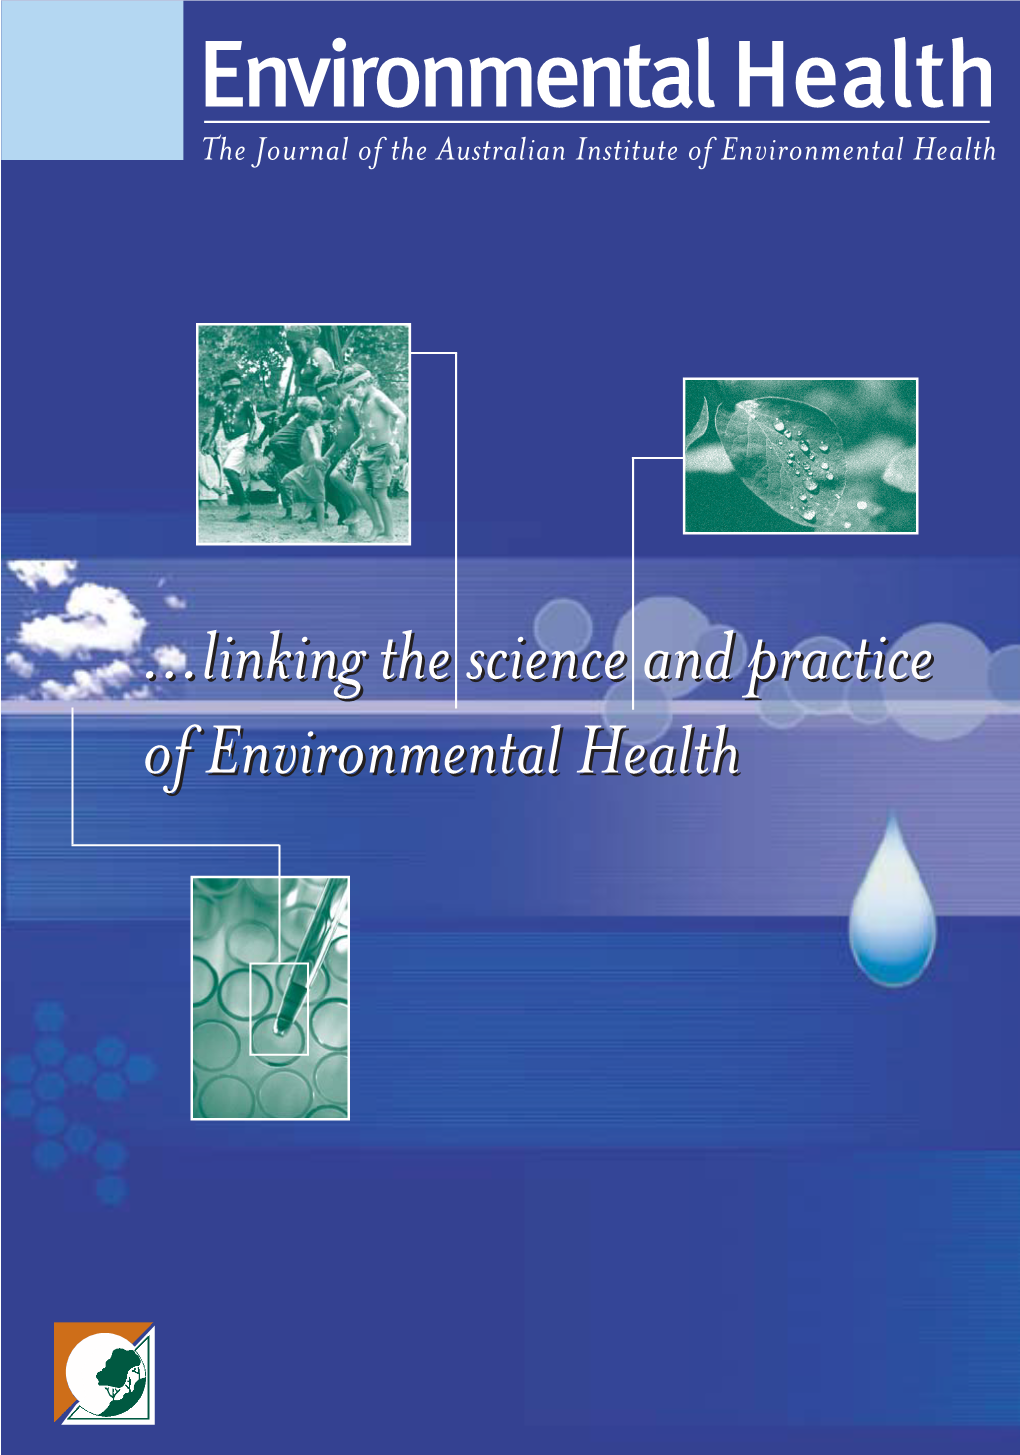 Environmental Health Australia